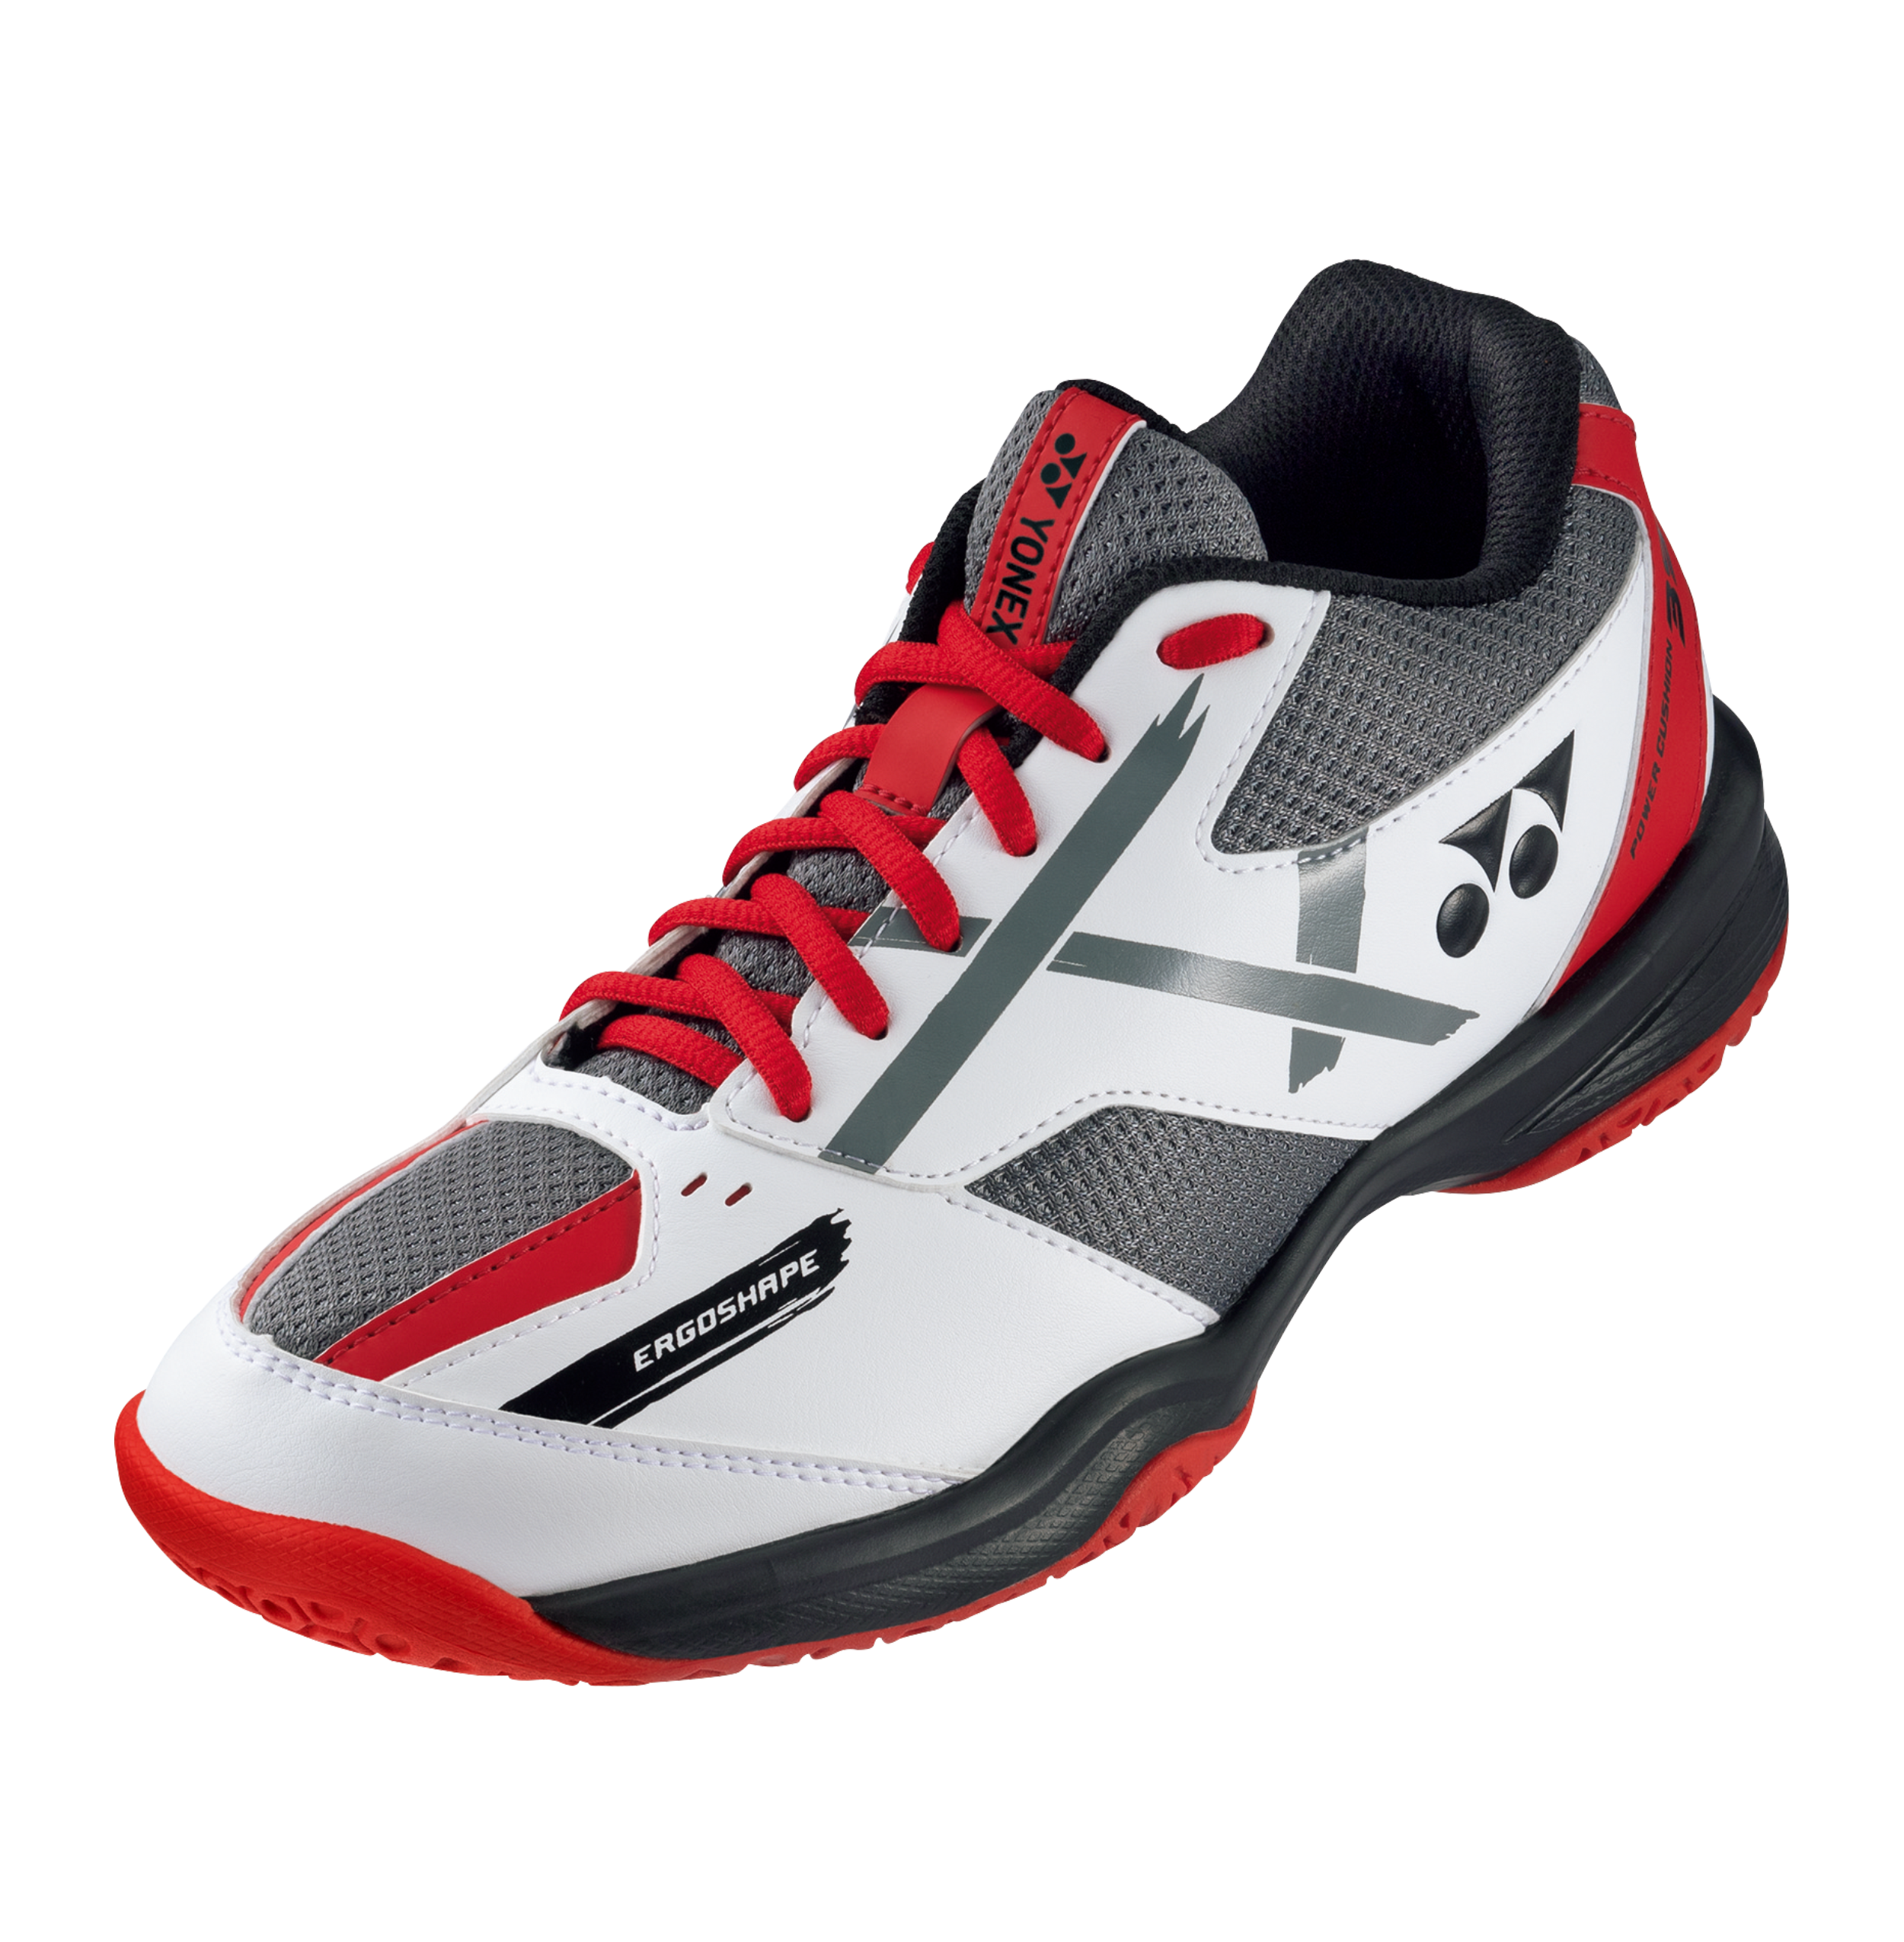 Yonex badminton shoes POWER CUSHION 39 WIDE UNISEX - SHB39WEX - White / Red